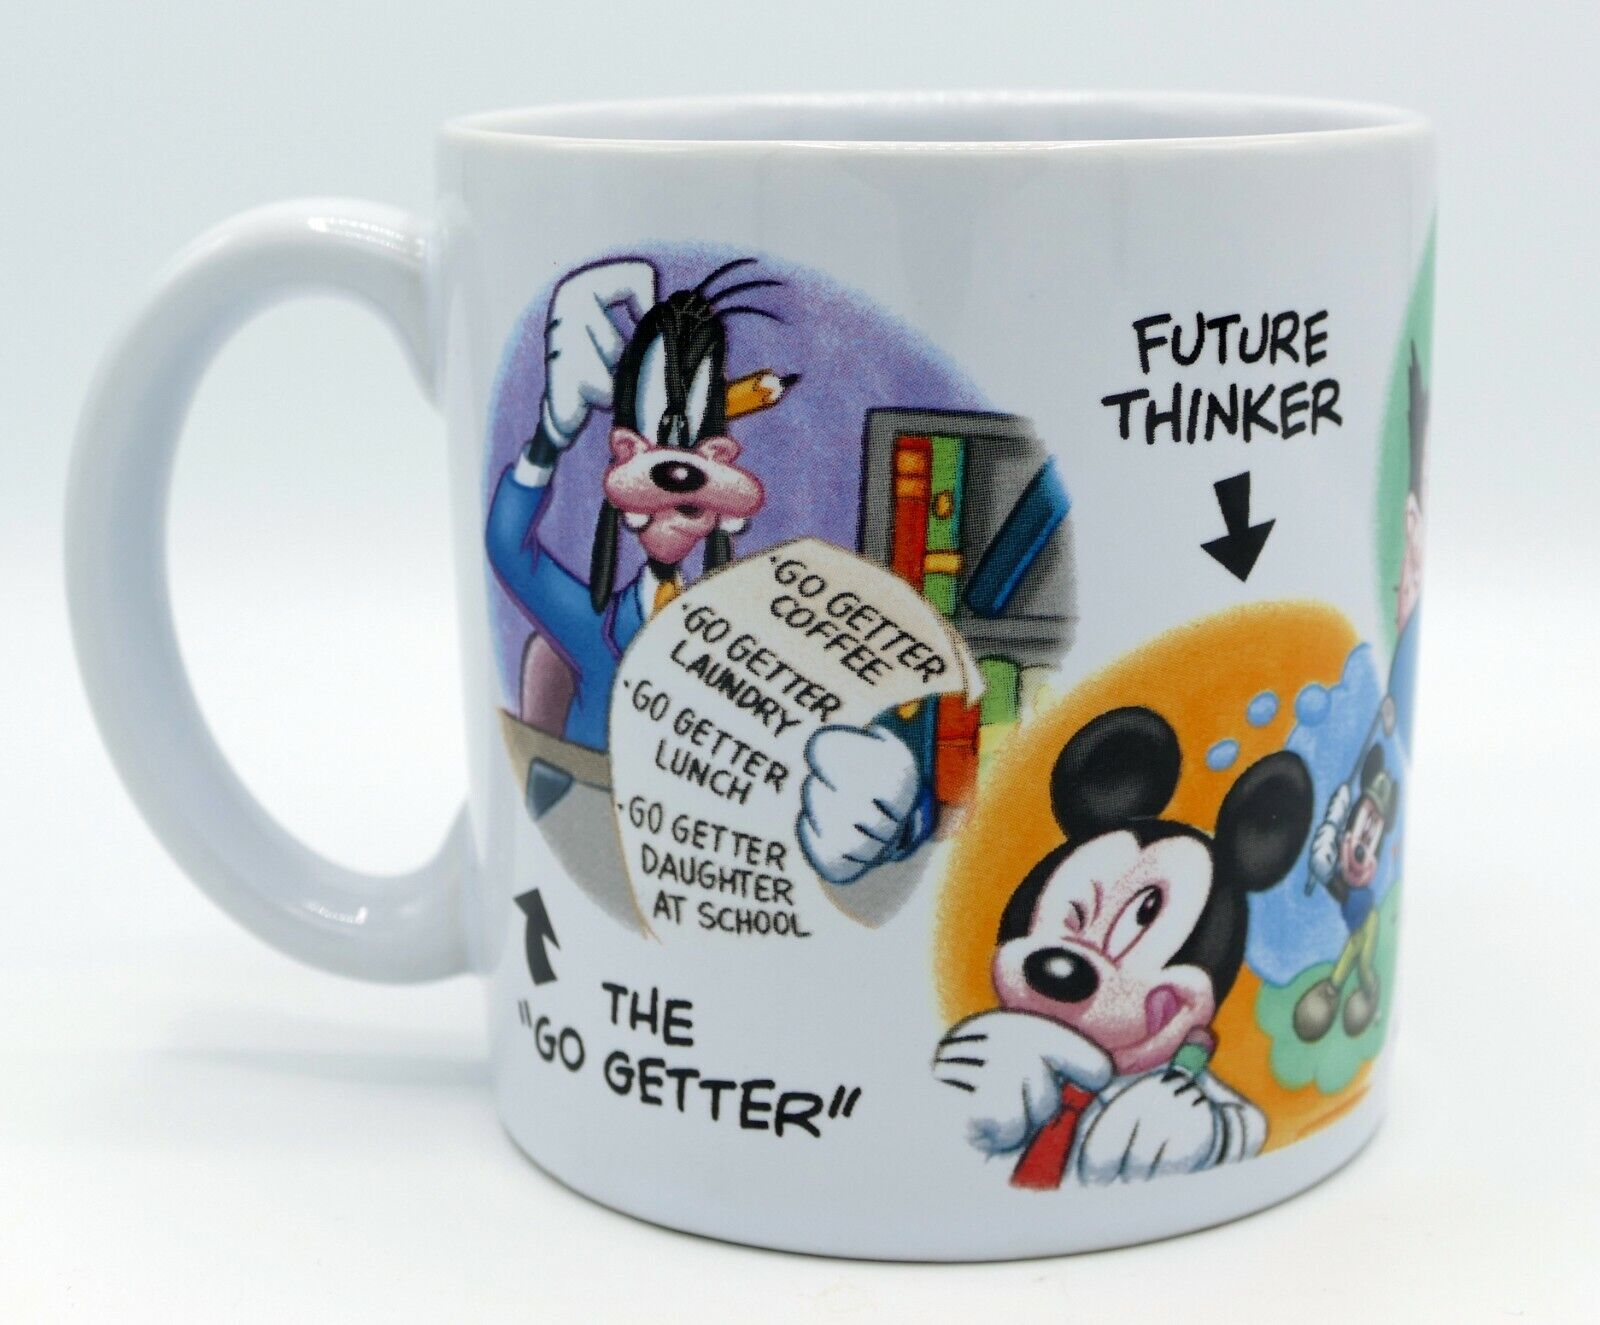 Disney Mug with Cartoon Characters Depict 5 Work Ethics